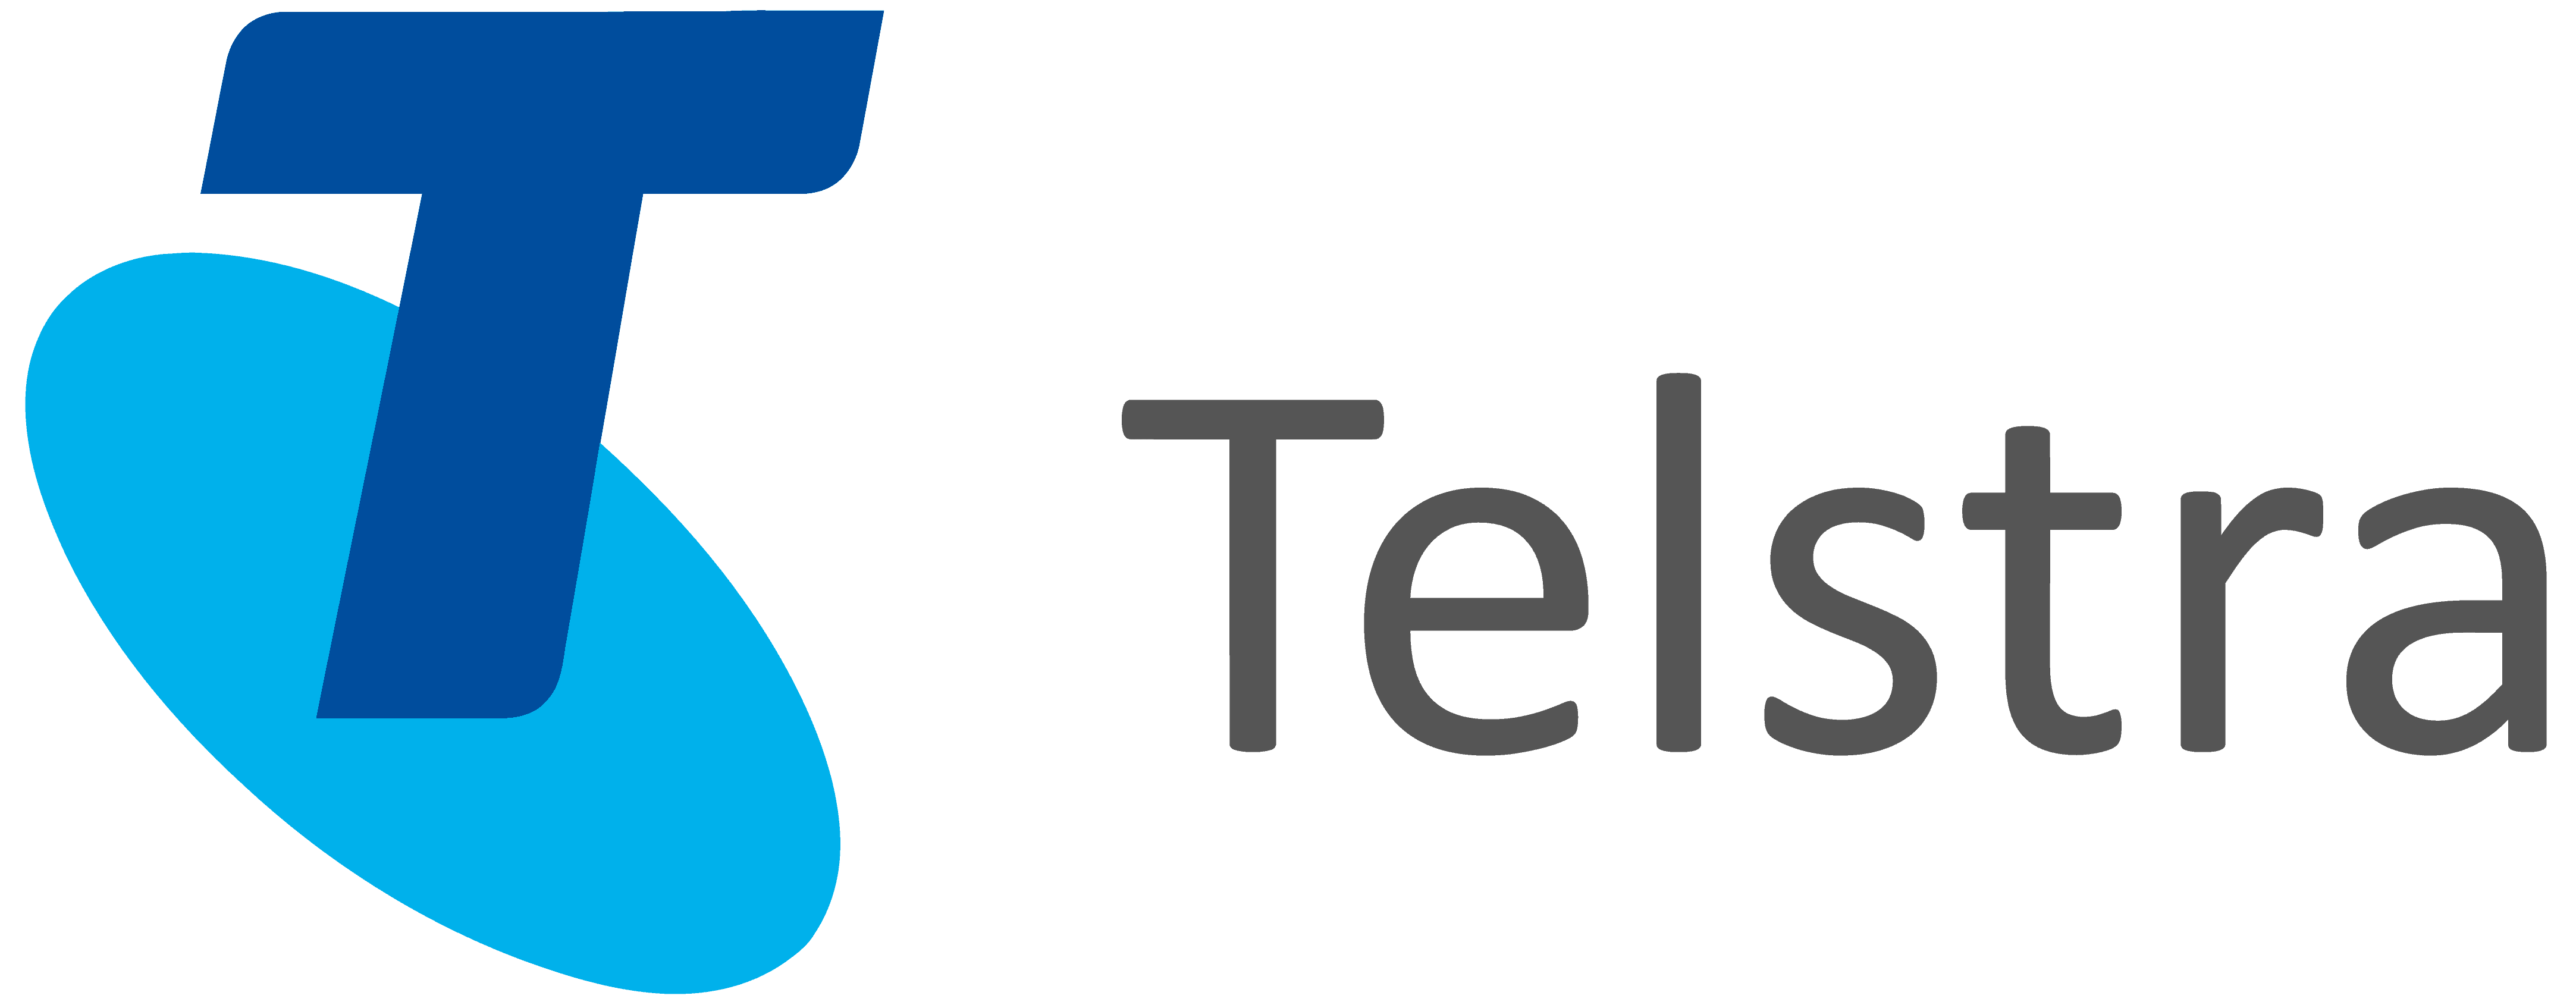 Telstra student discounts logo